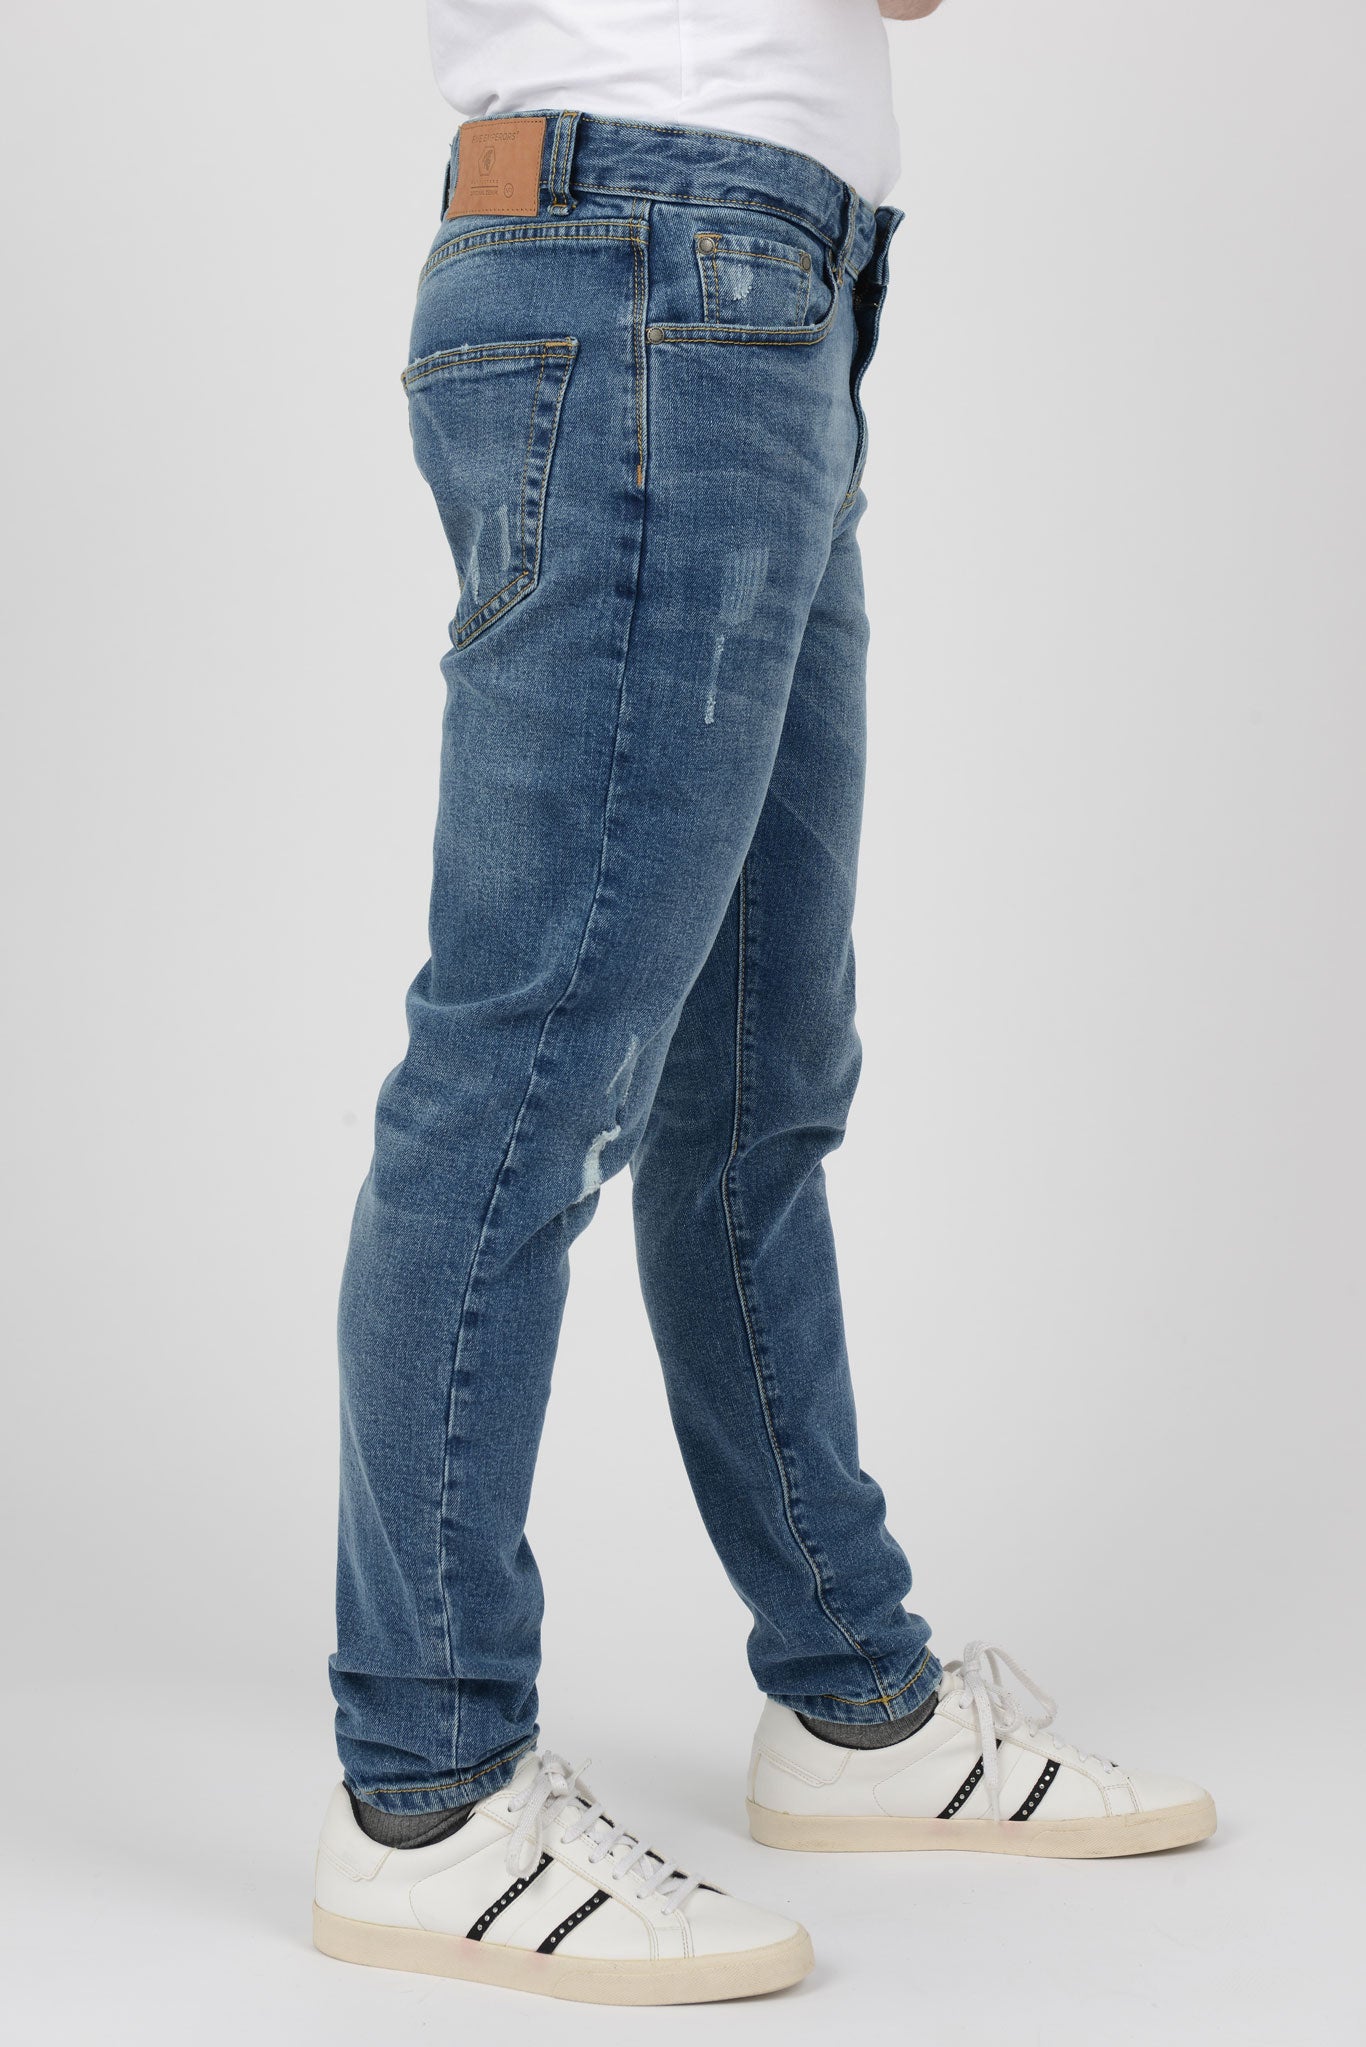 Apollo Men’s Slim Fit Tapered Jeans – Vintage Wash